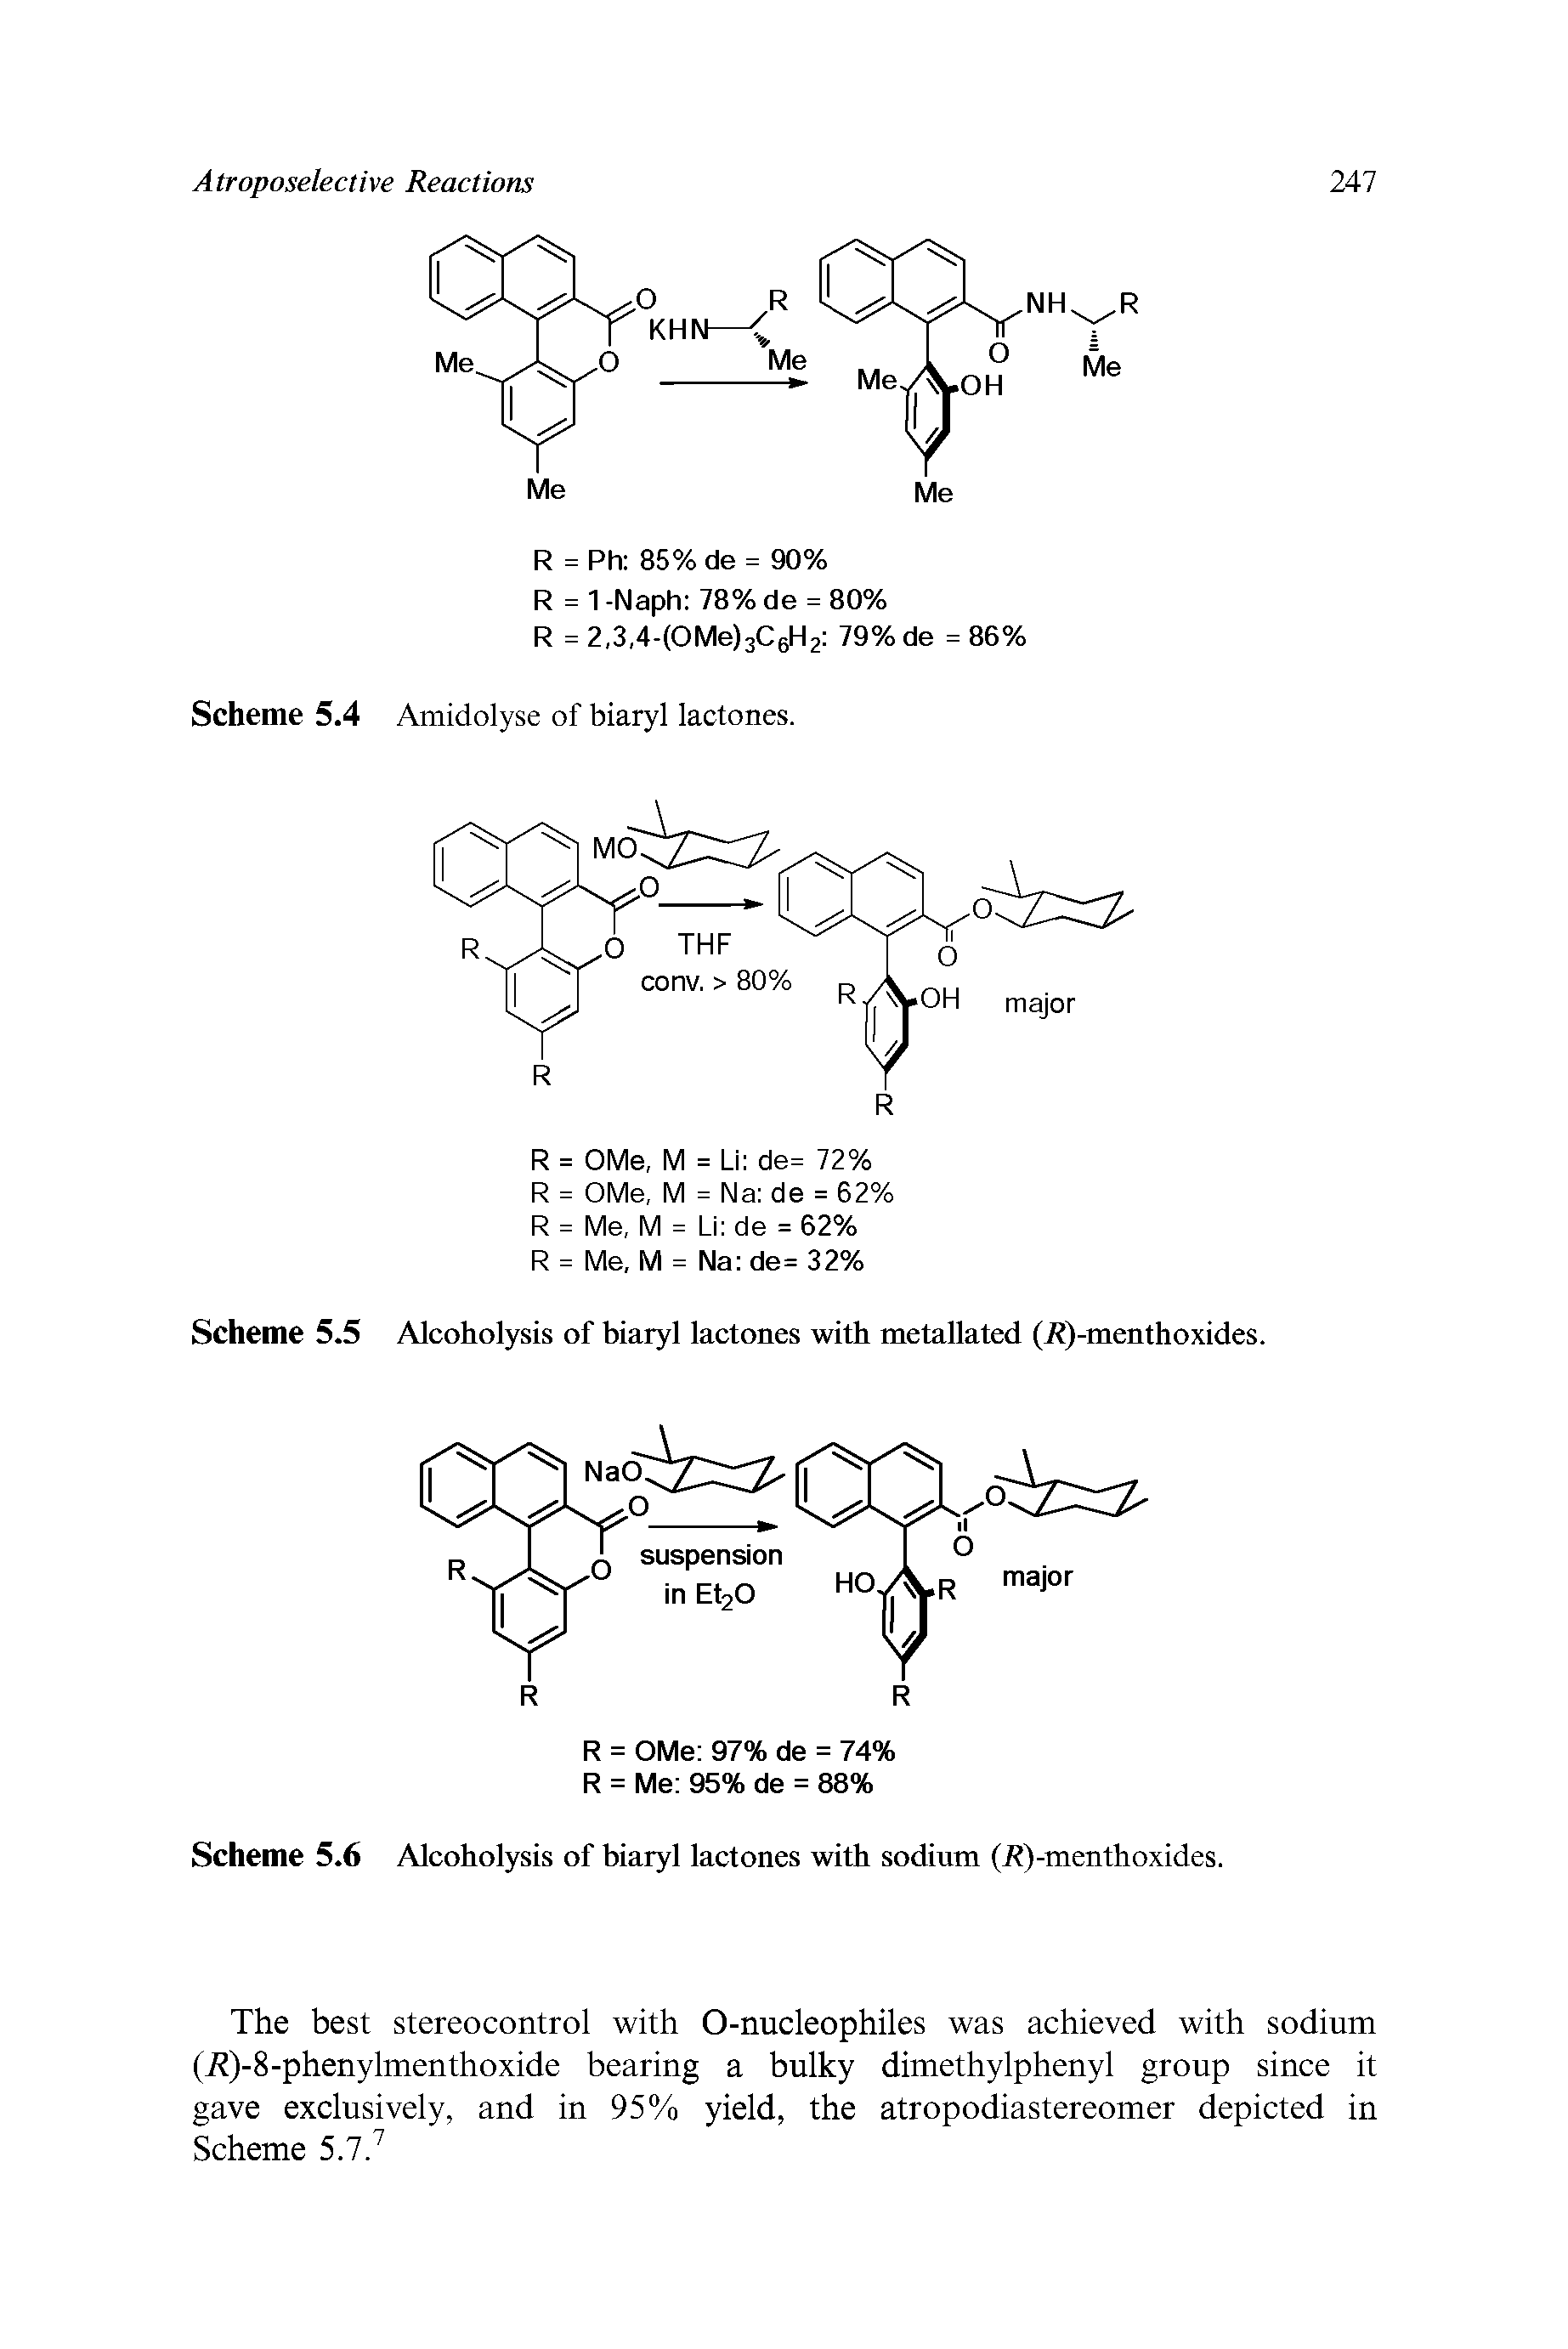 Scheme 5.6 Alcoholysis of biaryl lactones with sodium (/ )-menthoxides.